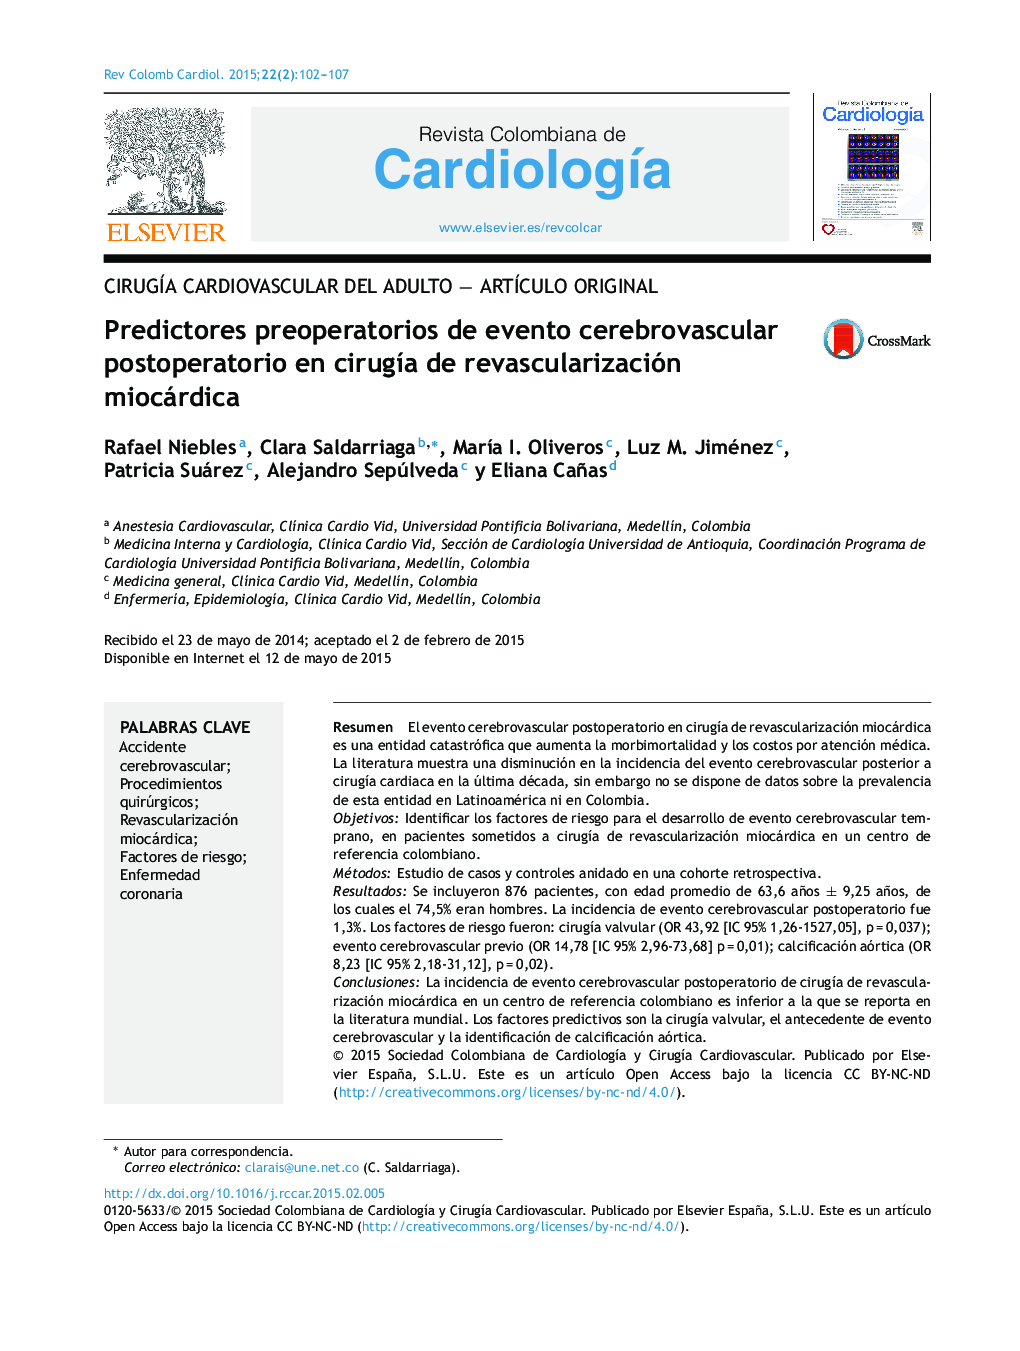 Predictores preoperatorios de evento cerebrovascular postoperatorio en cirugía de revascularización miocárdica